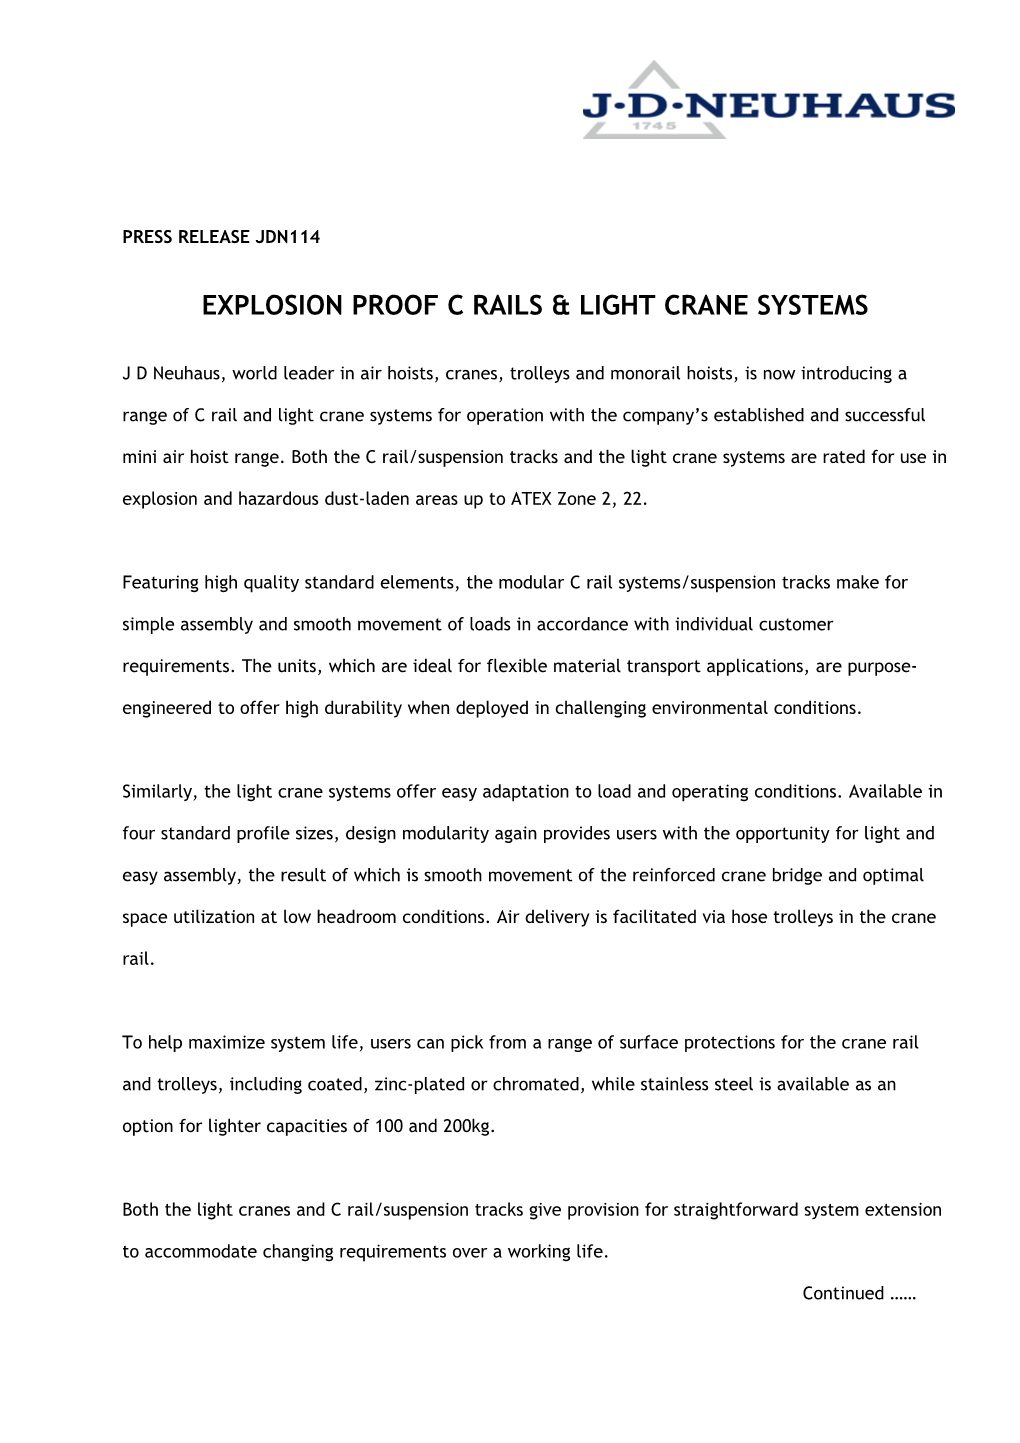 Explosion Proof C Rails & Light Crane Systems